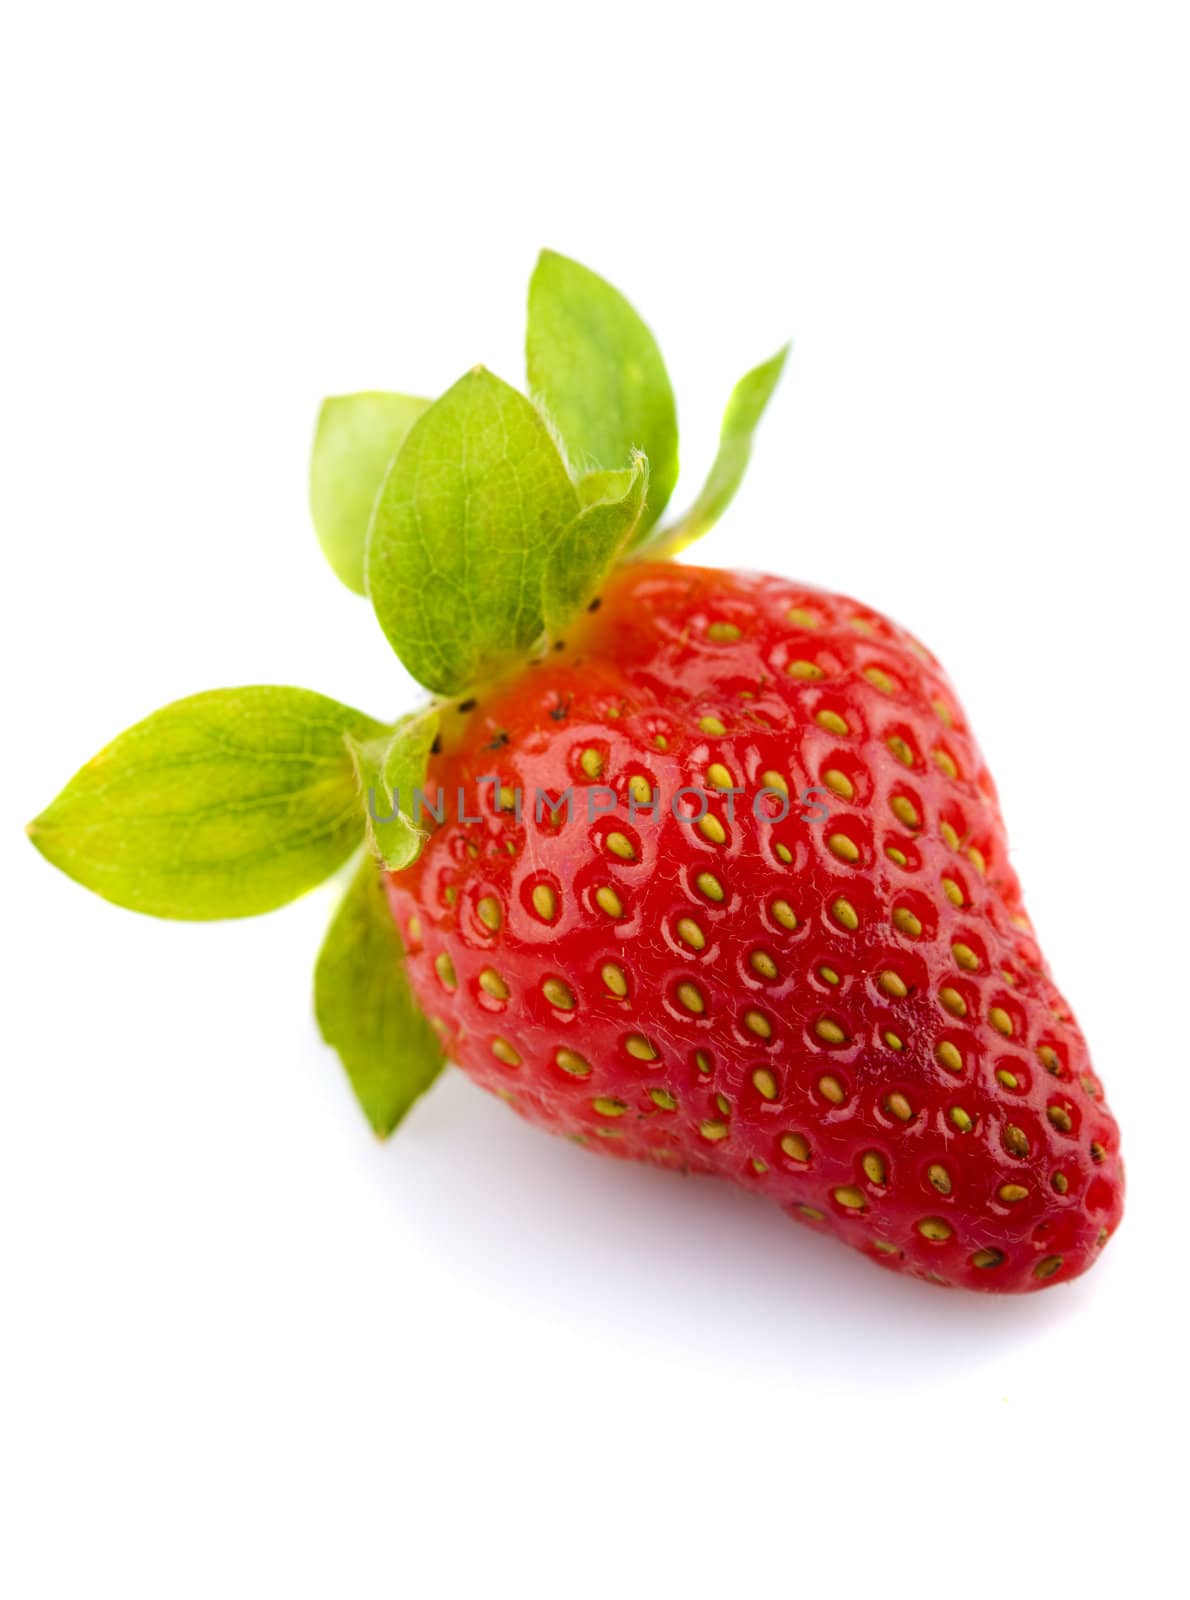 strawberry by yuliang11